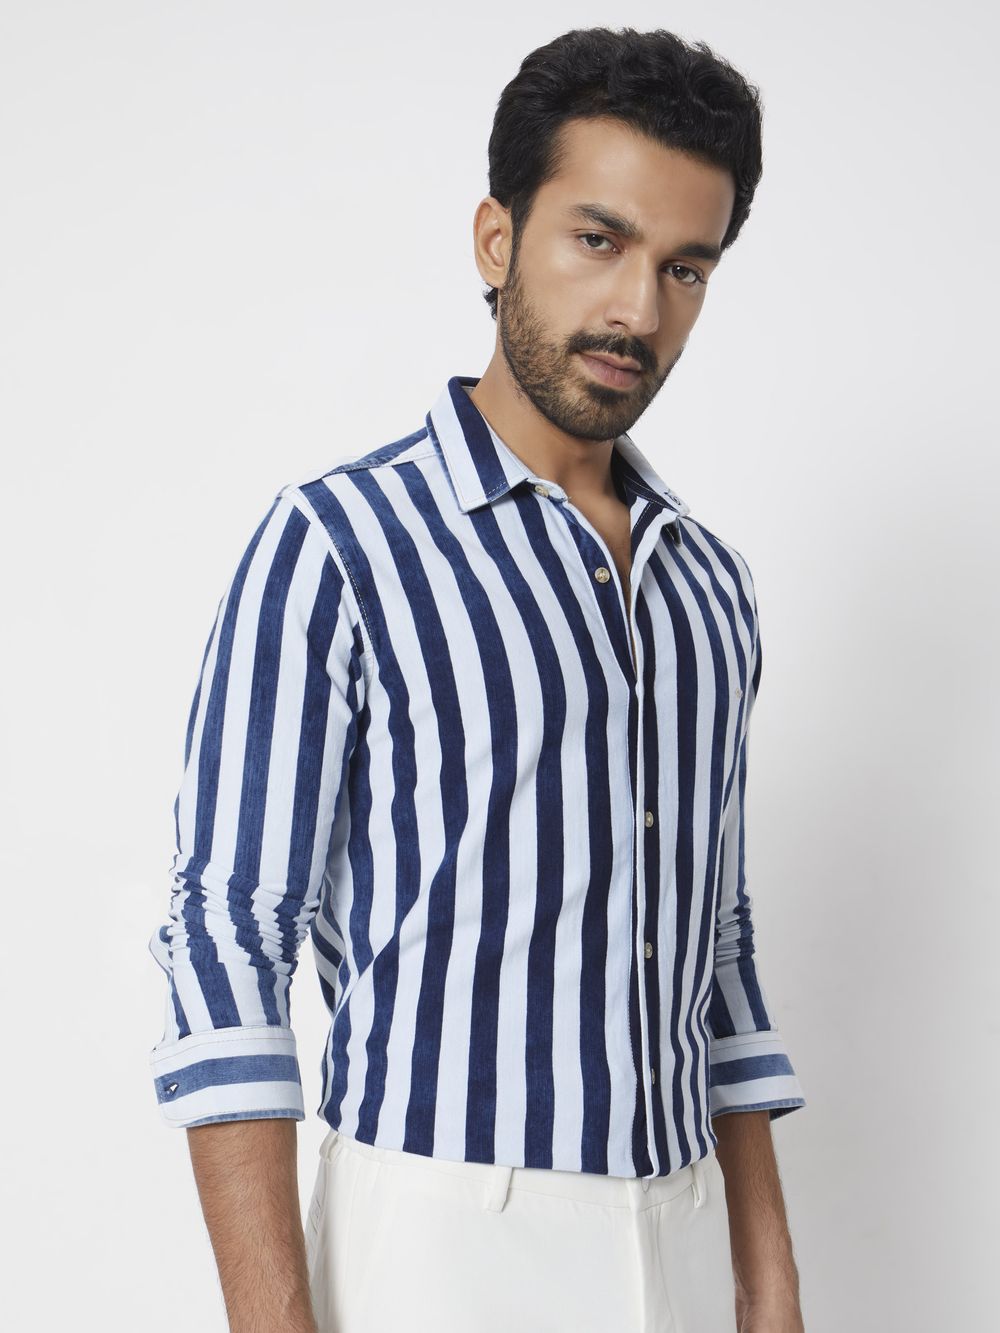 Indigo Blue Knitted Stripe Slim Fit Casual Shirt